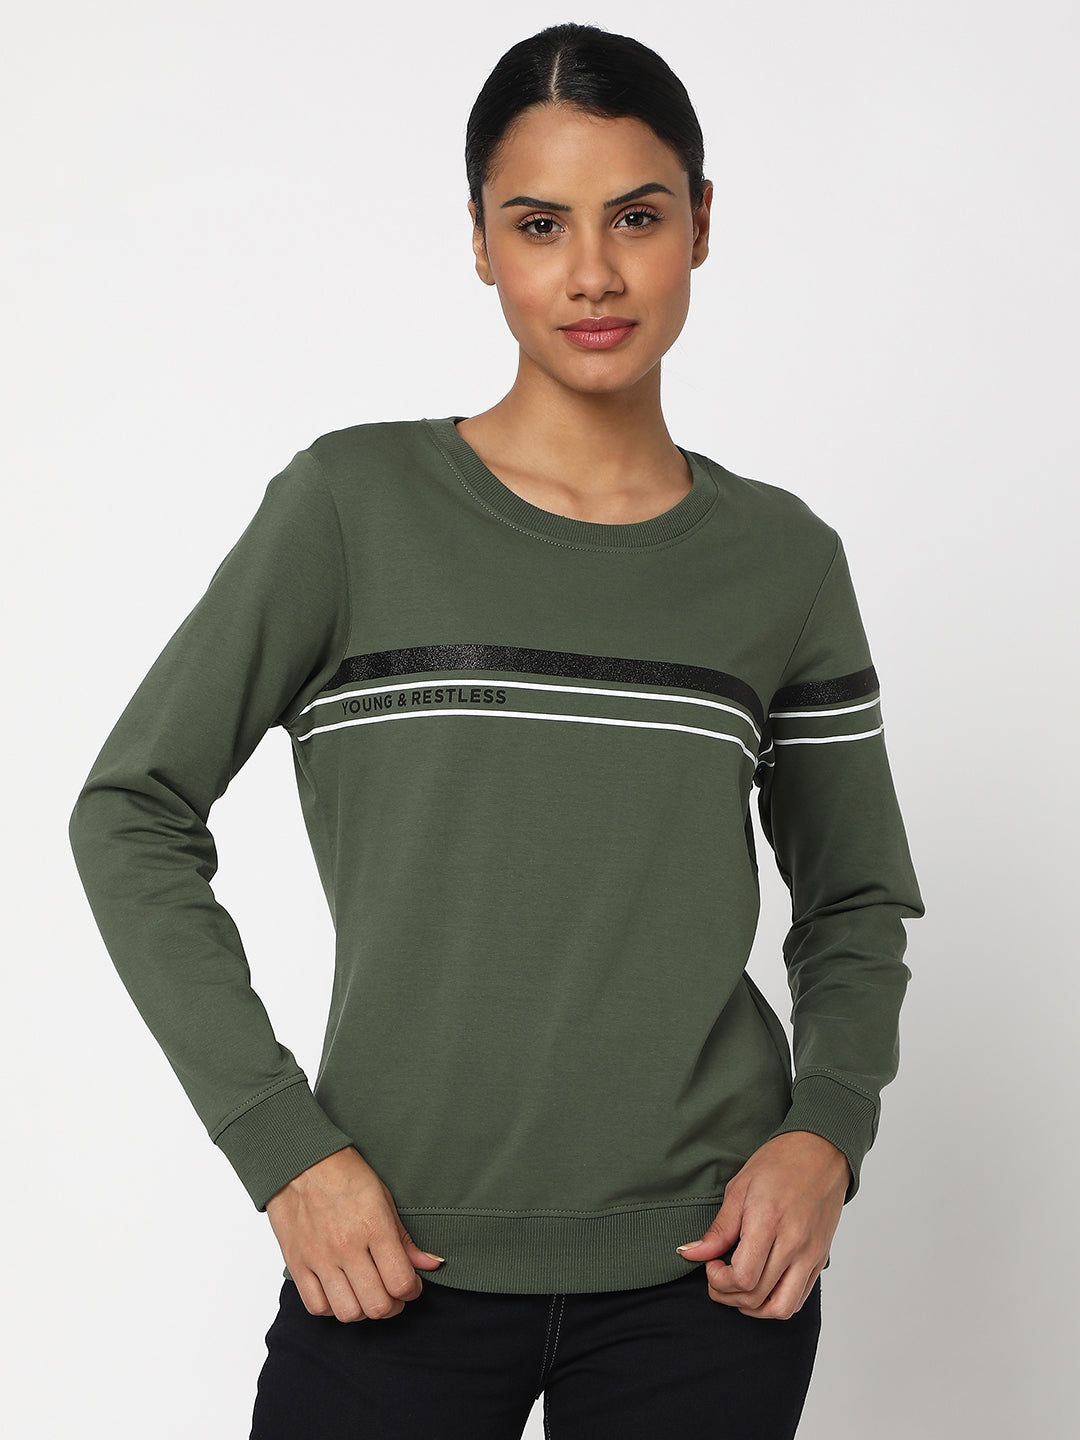 Spykar Olive Green Cotton Blend Full Sleeve Round Neck Sweatshirts For Women